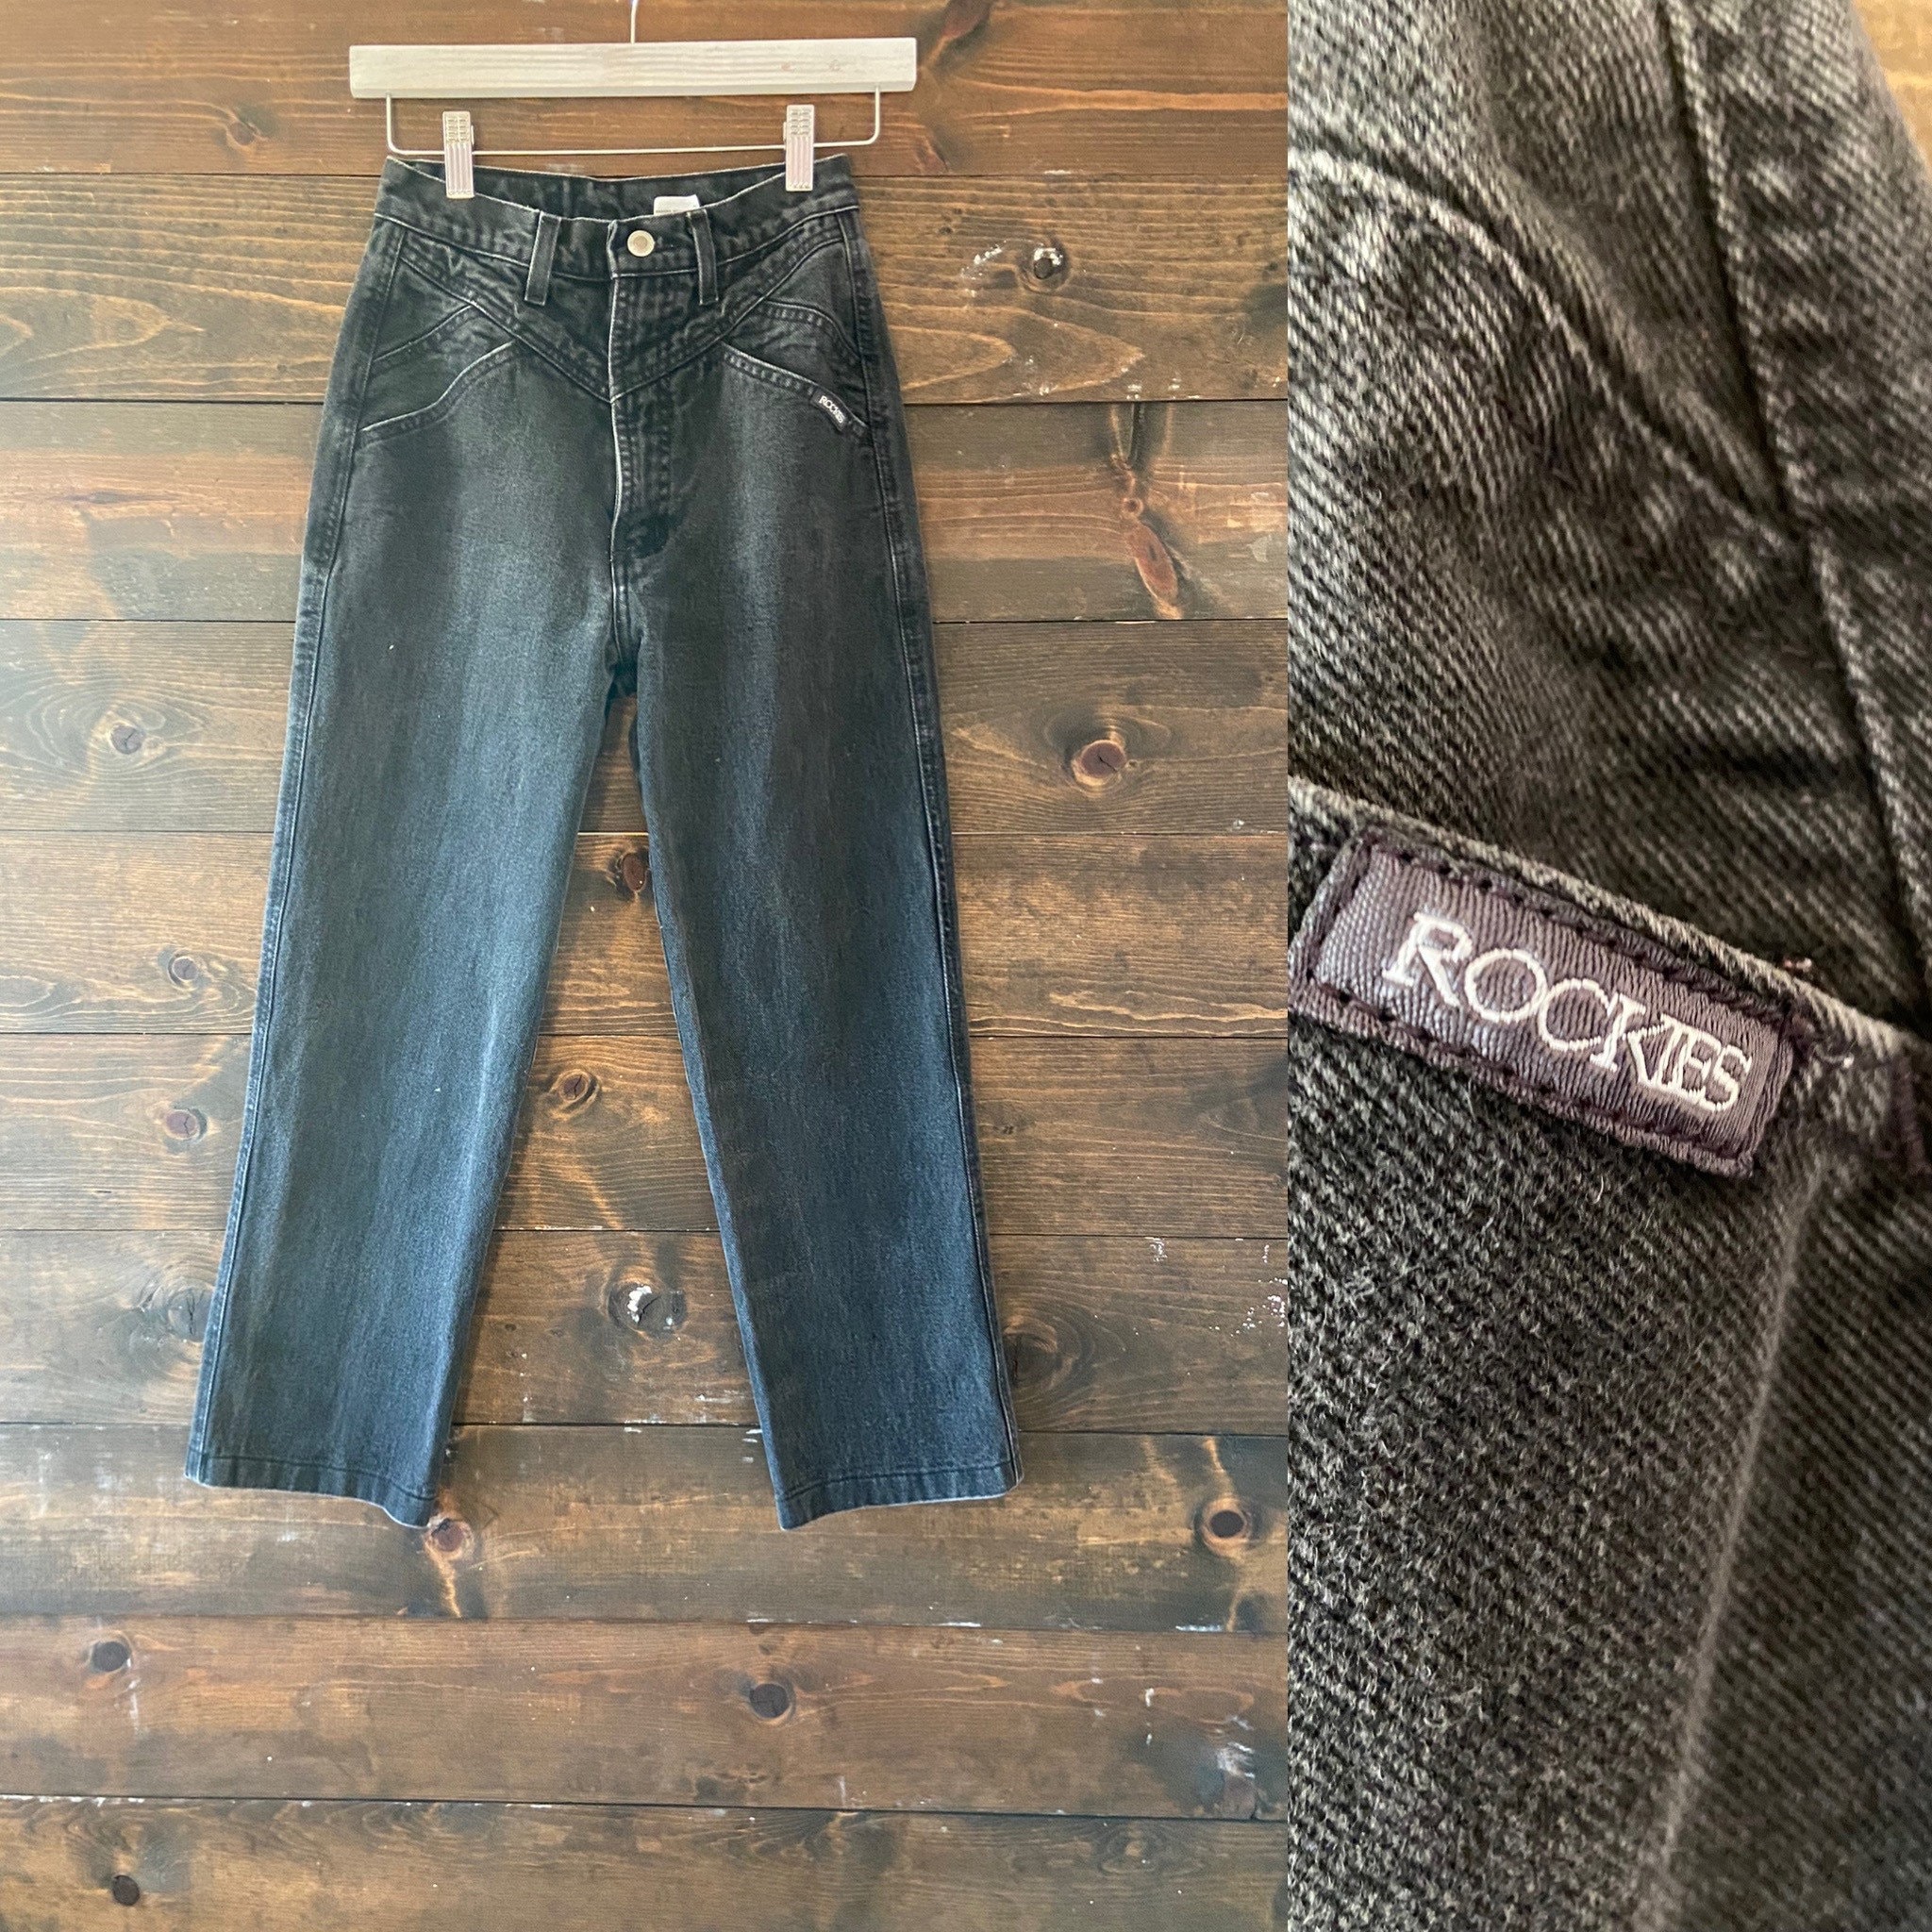 Vintage 90s Black Rockies Jeans / High Rise Denim / Mom Jeans 